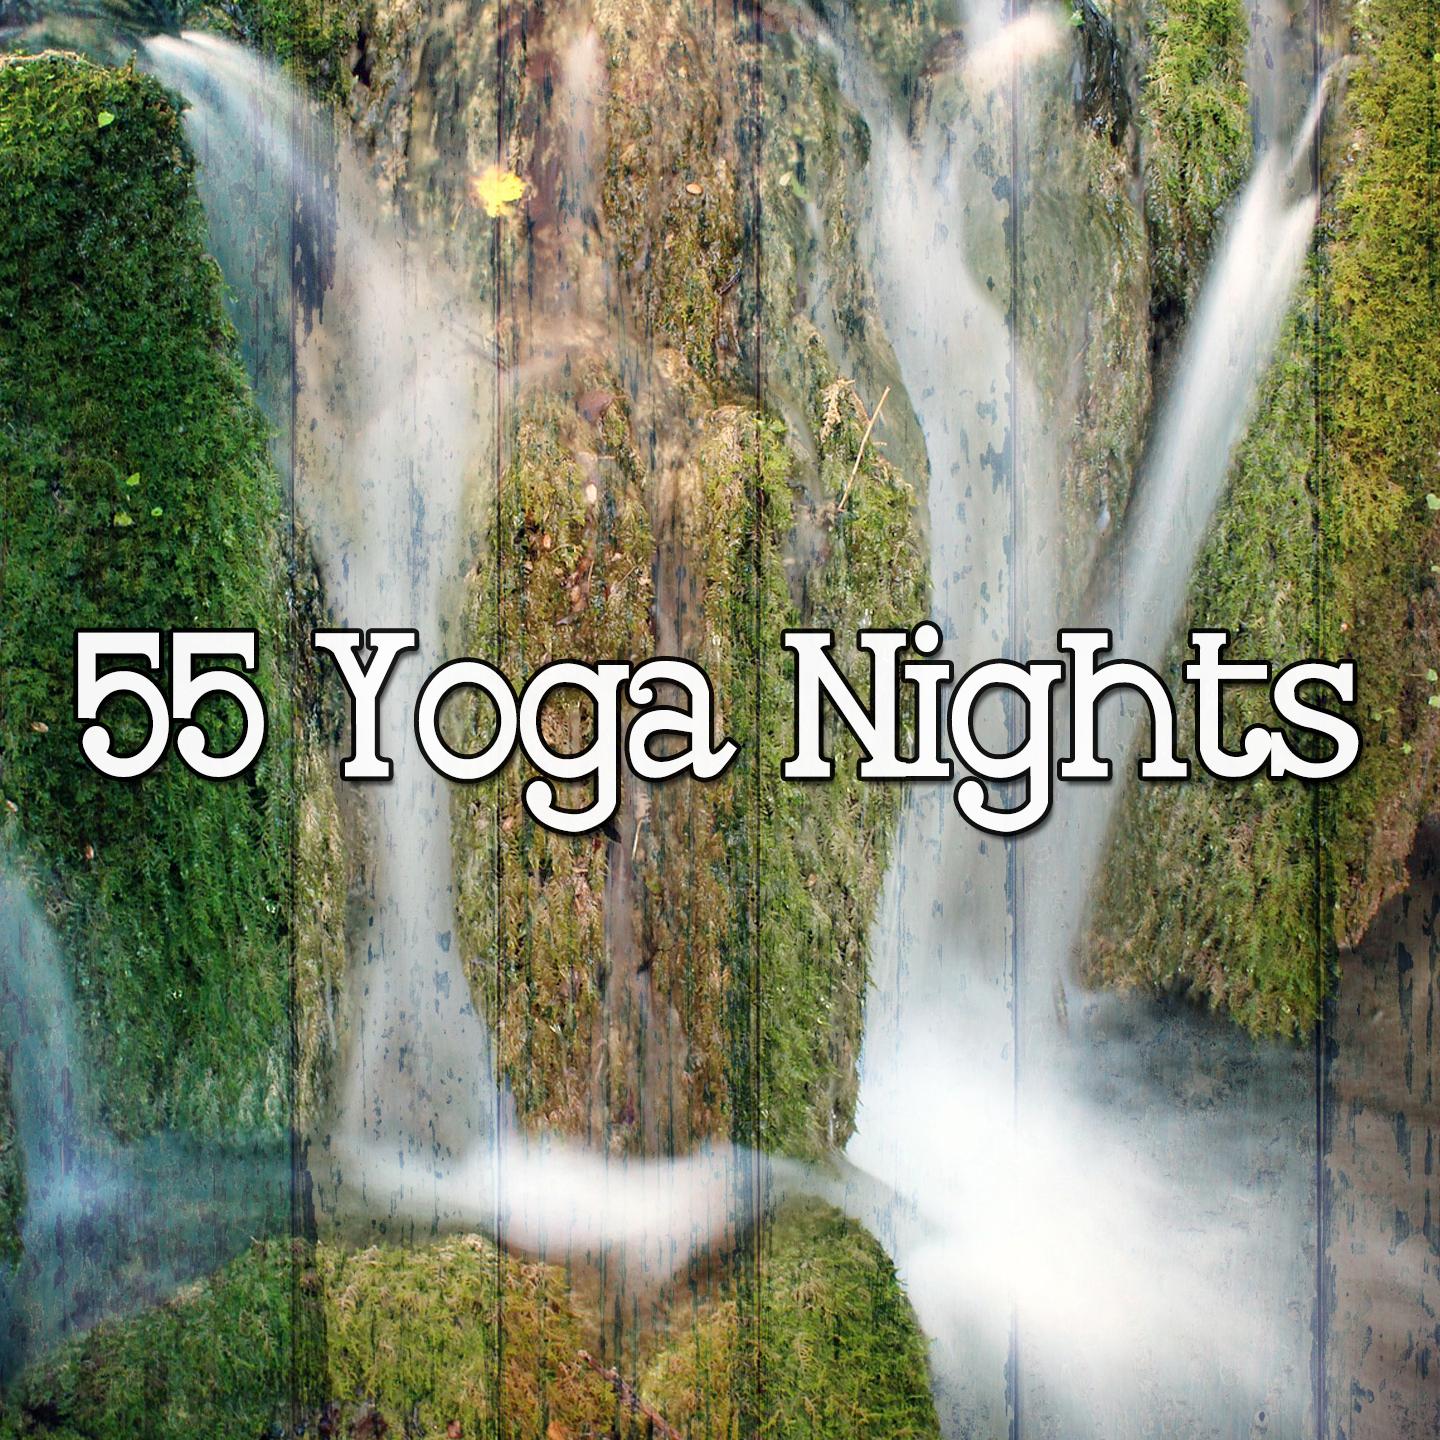 55 Yoga Nights